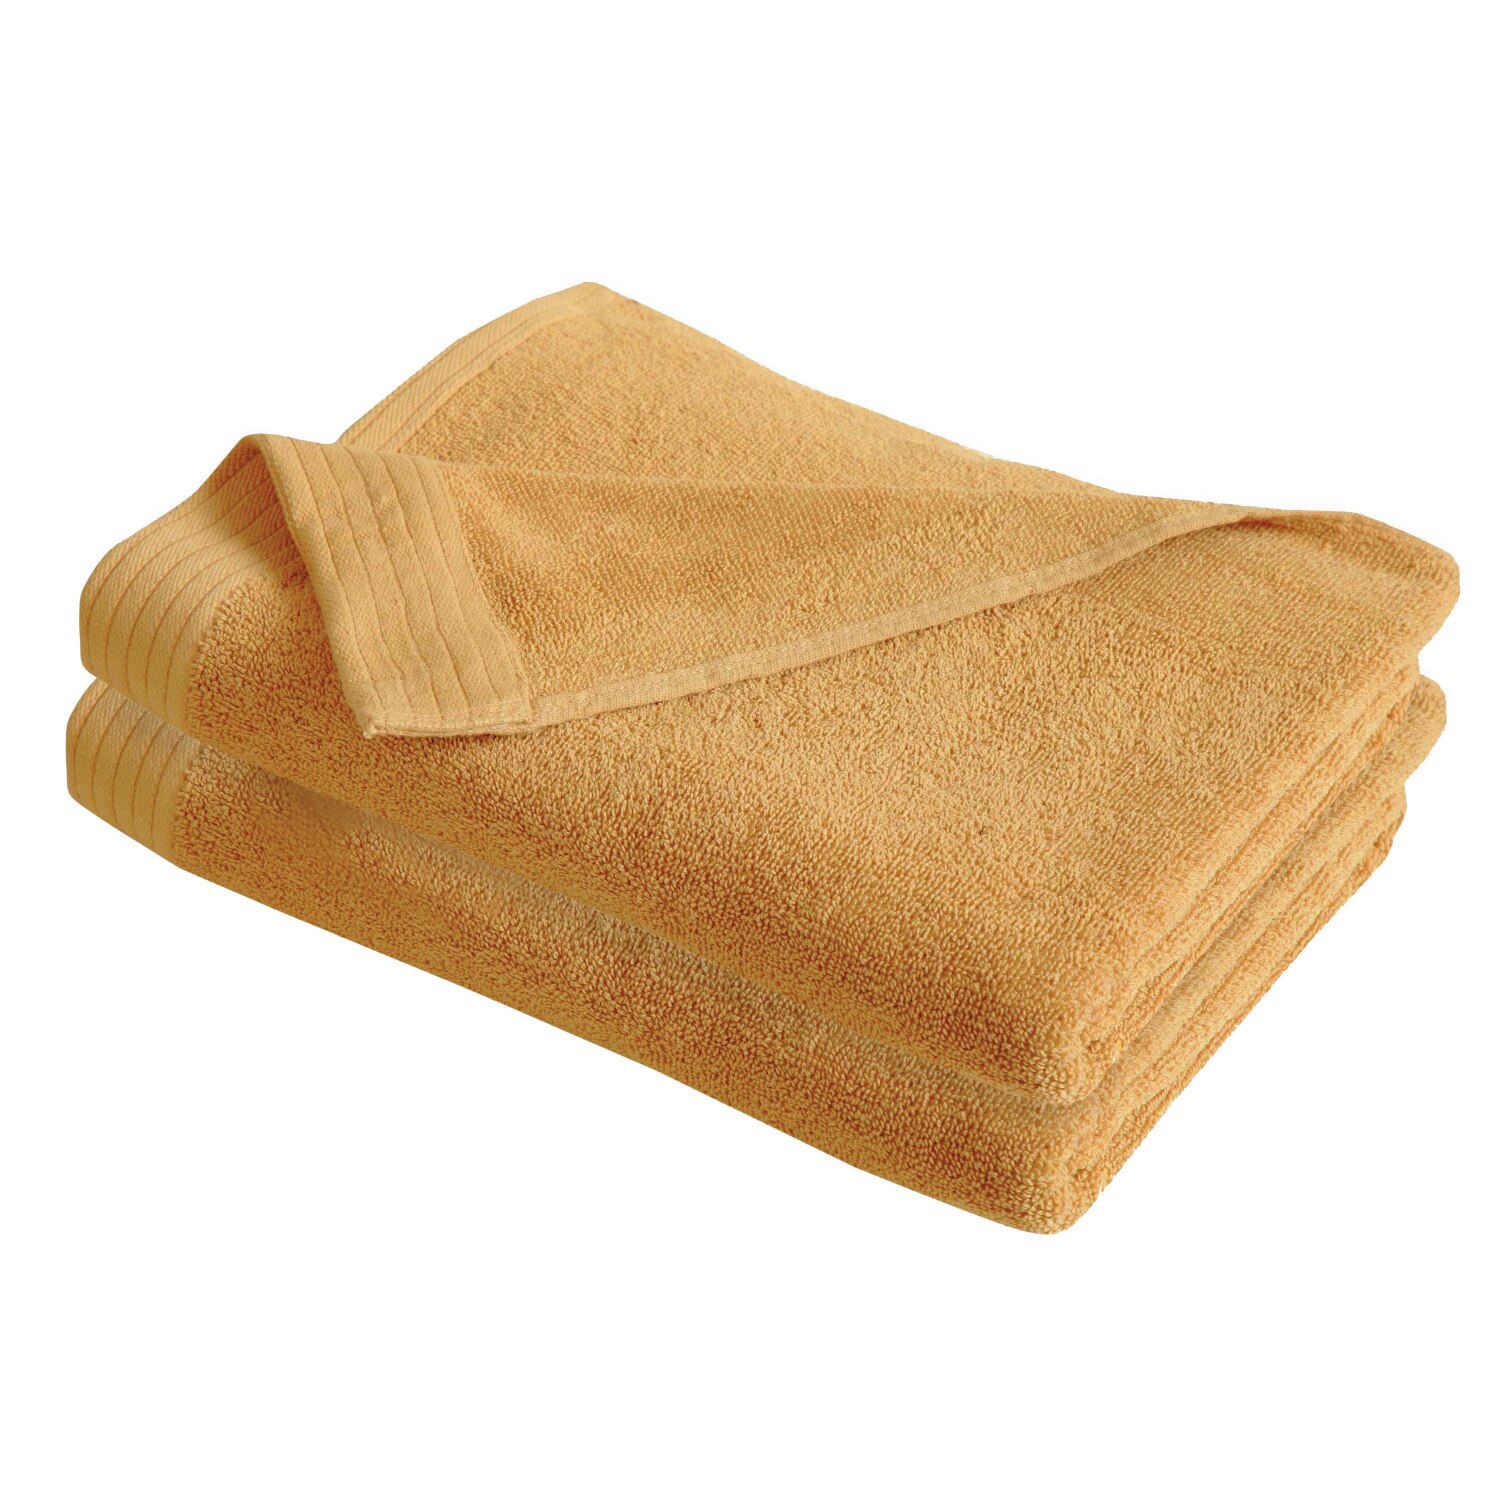 IZOD Everyday Gold 4 Pack Bath Towels